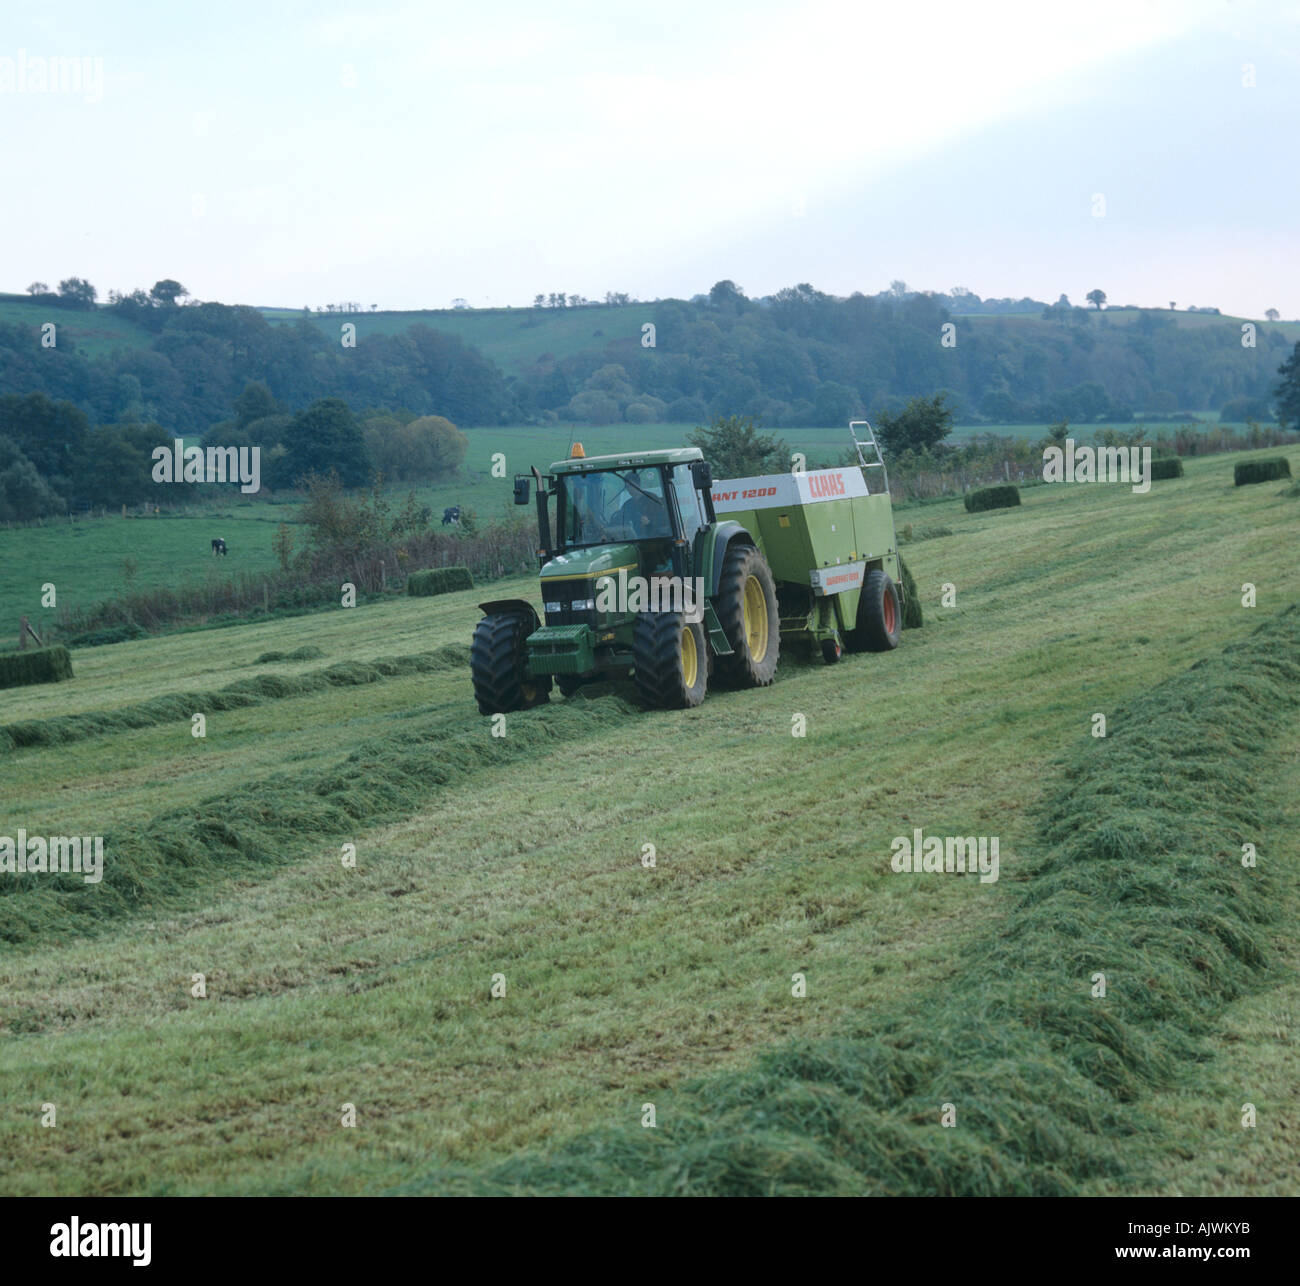 John Deere tractor Claas high density baler baling late season grass silage Stock Photo